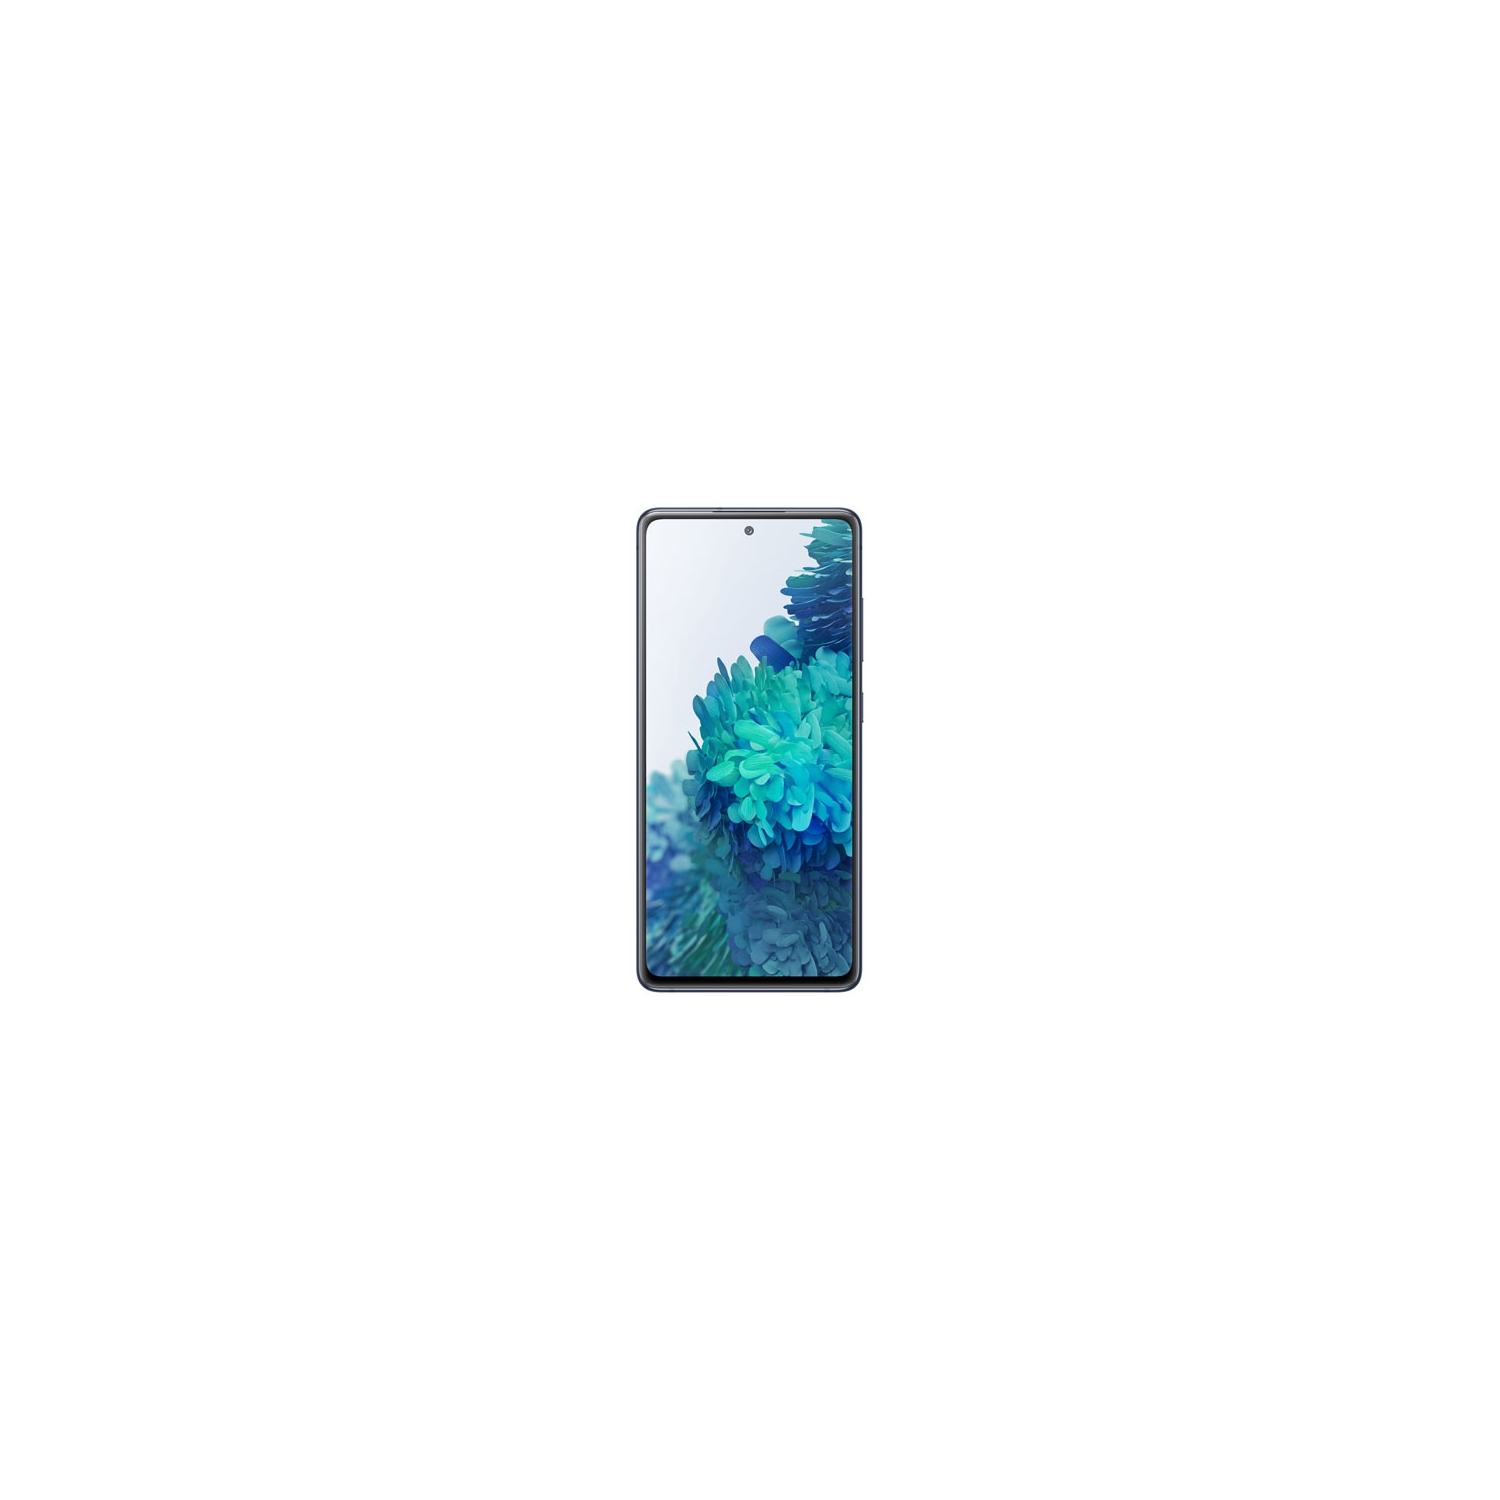 Refurbished (Excellent) - Samsung Galaxy S20 FE 5G 128GB Smartphone - Cloud Navy - Unlocked - Certified Refurbished